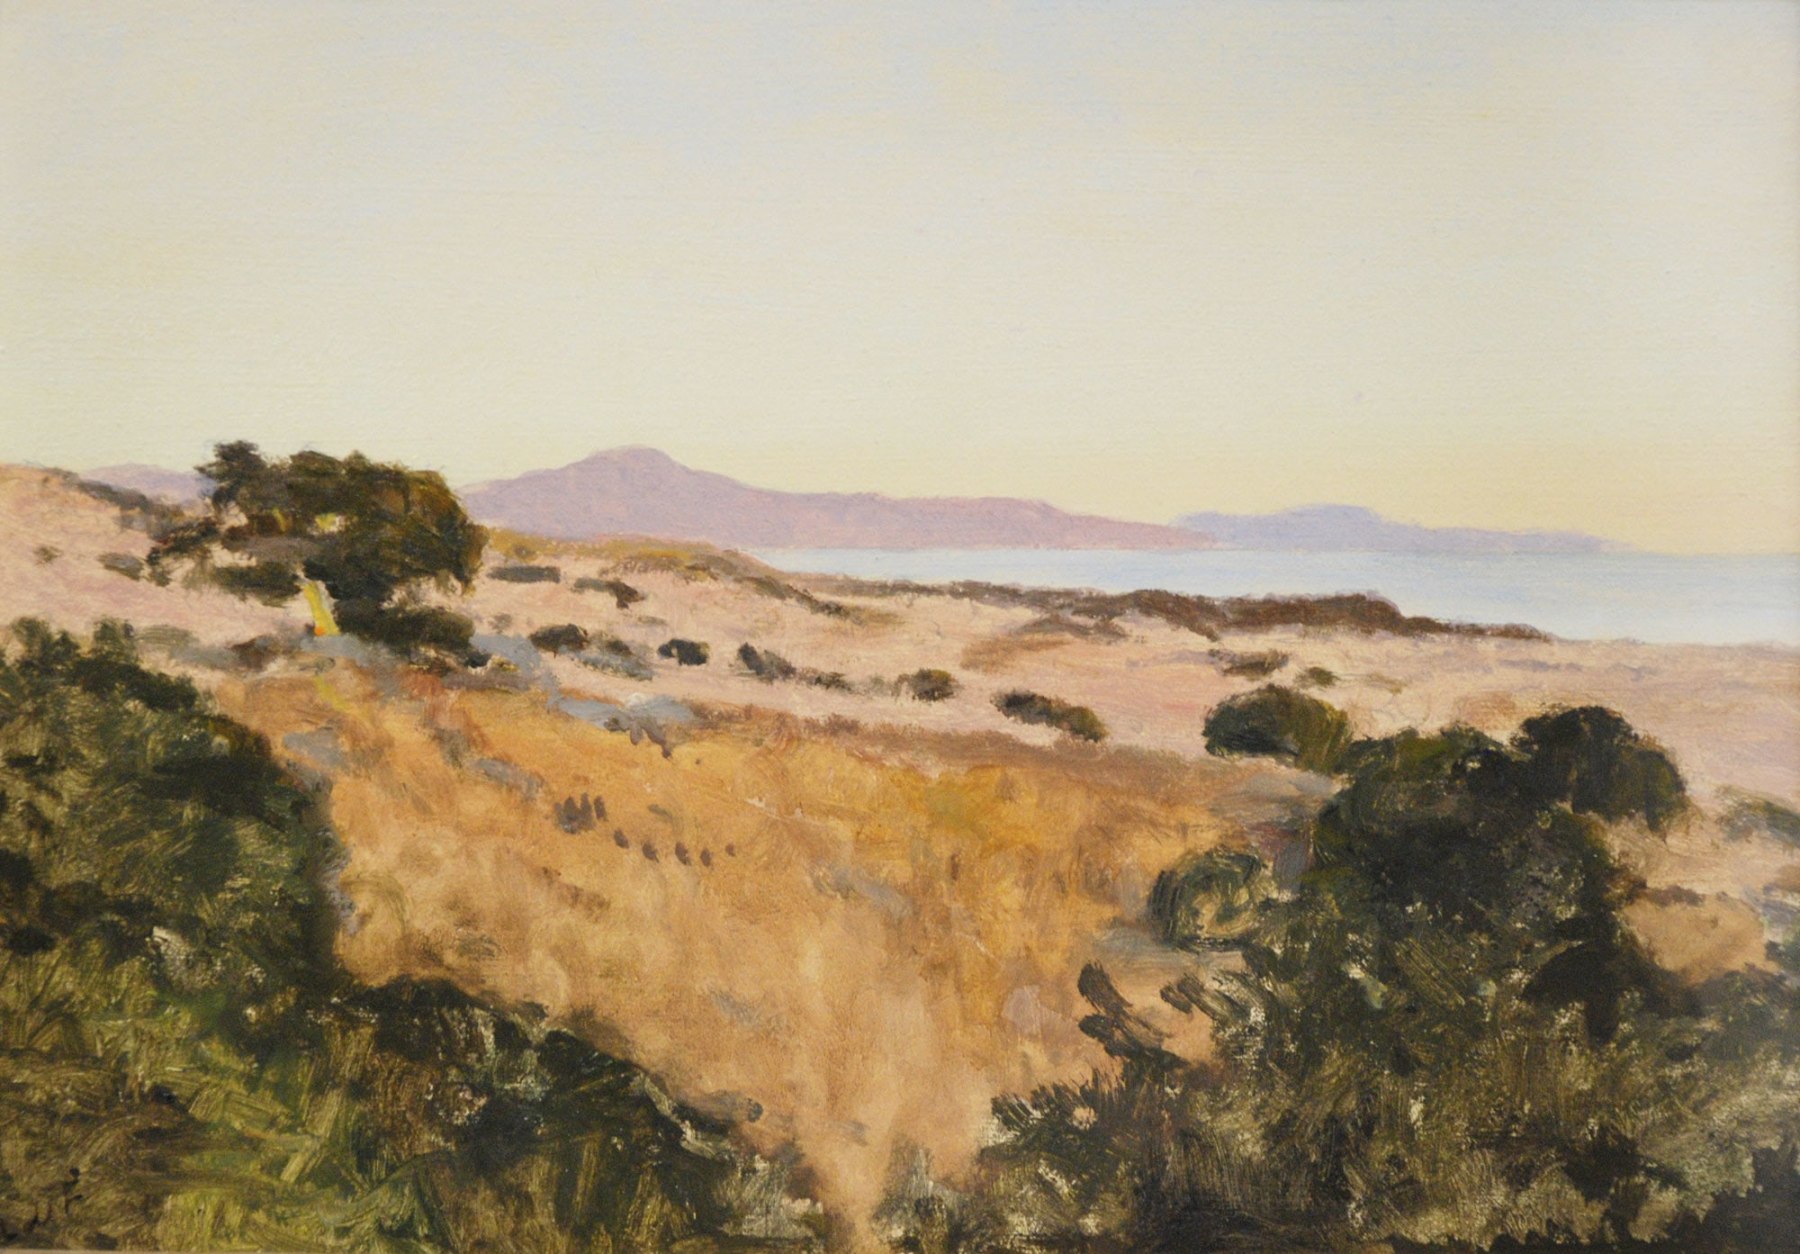 Lockwood de Forest (1850-1932), Santa Barbara to the Rincon to Point Mugu, c. 1915